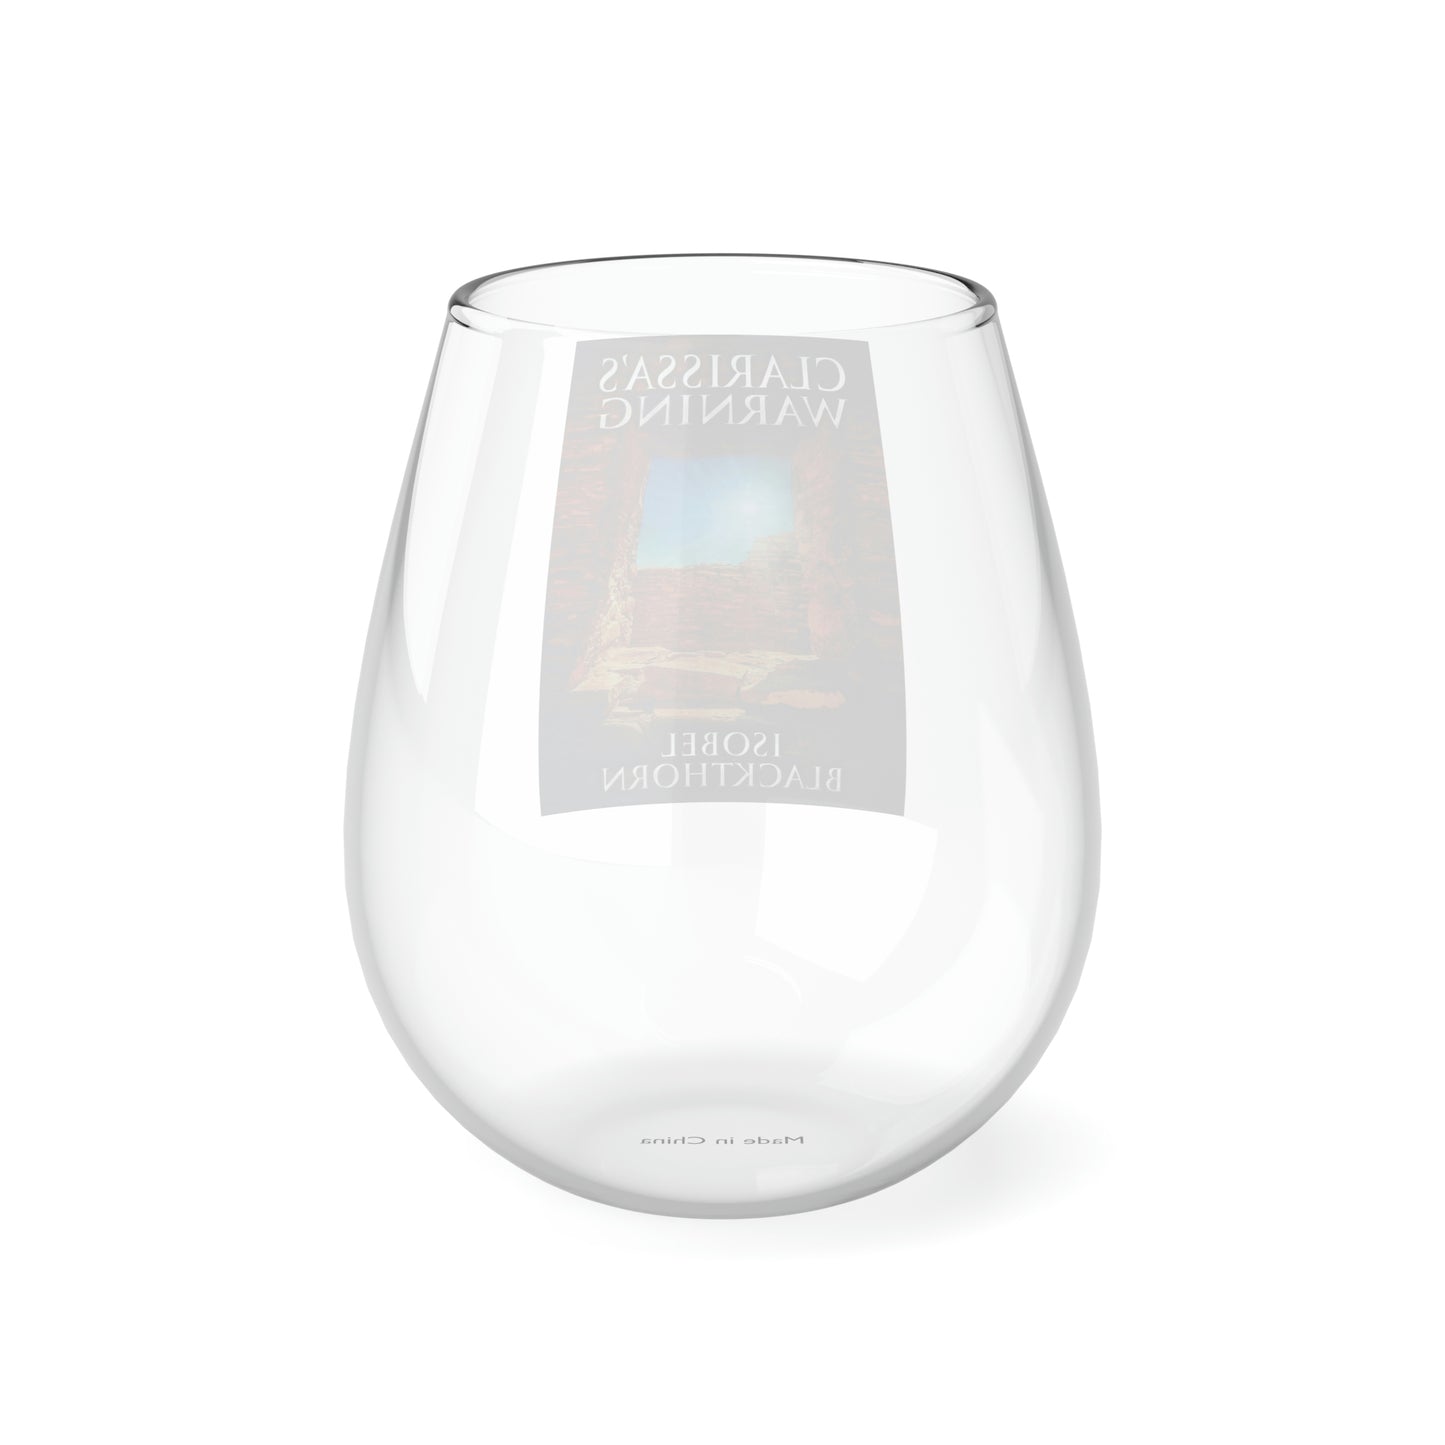 Clarissa's Warning - Stemless Wine Glass, 11.75oz